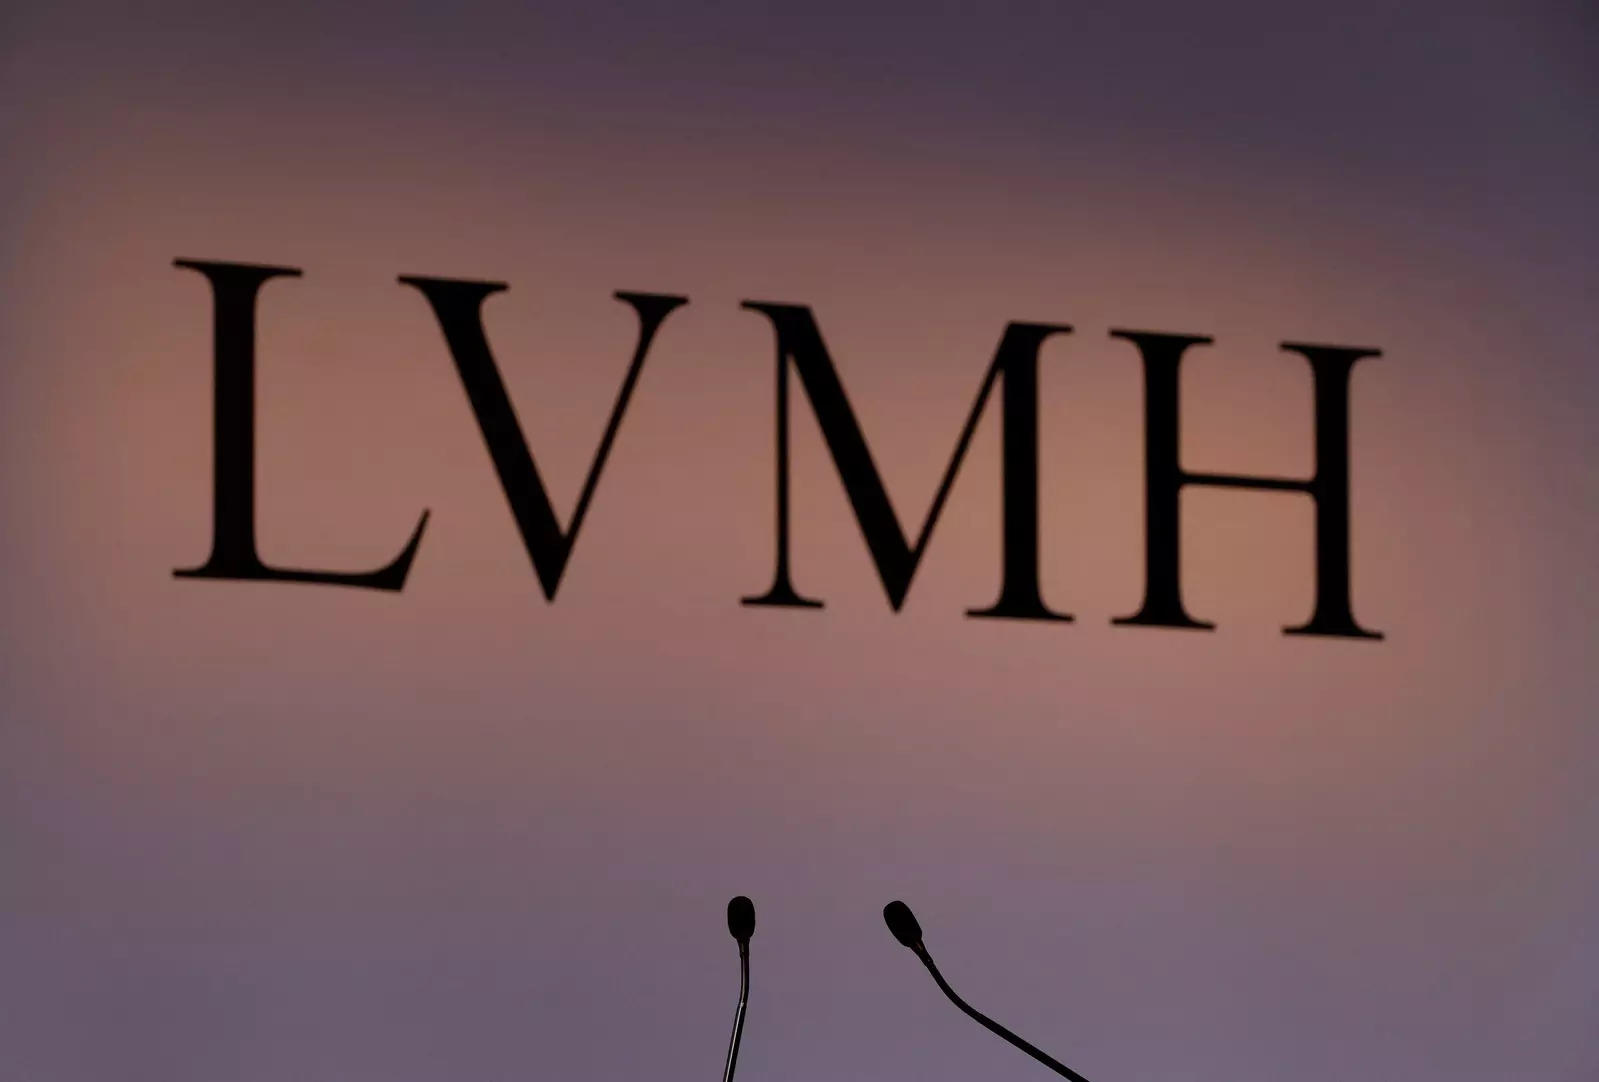 lvmh fashion group logo